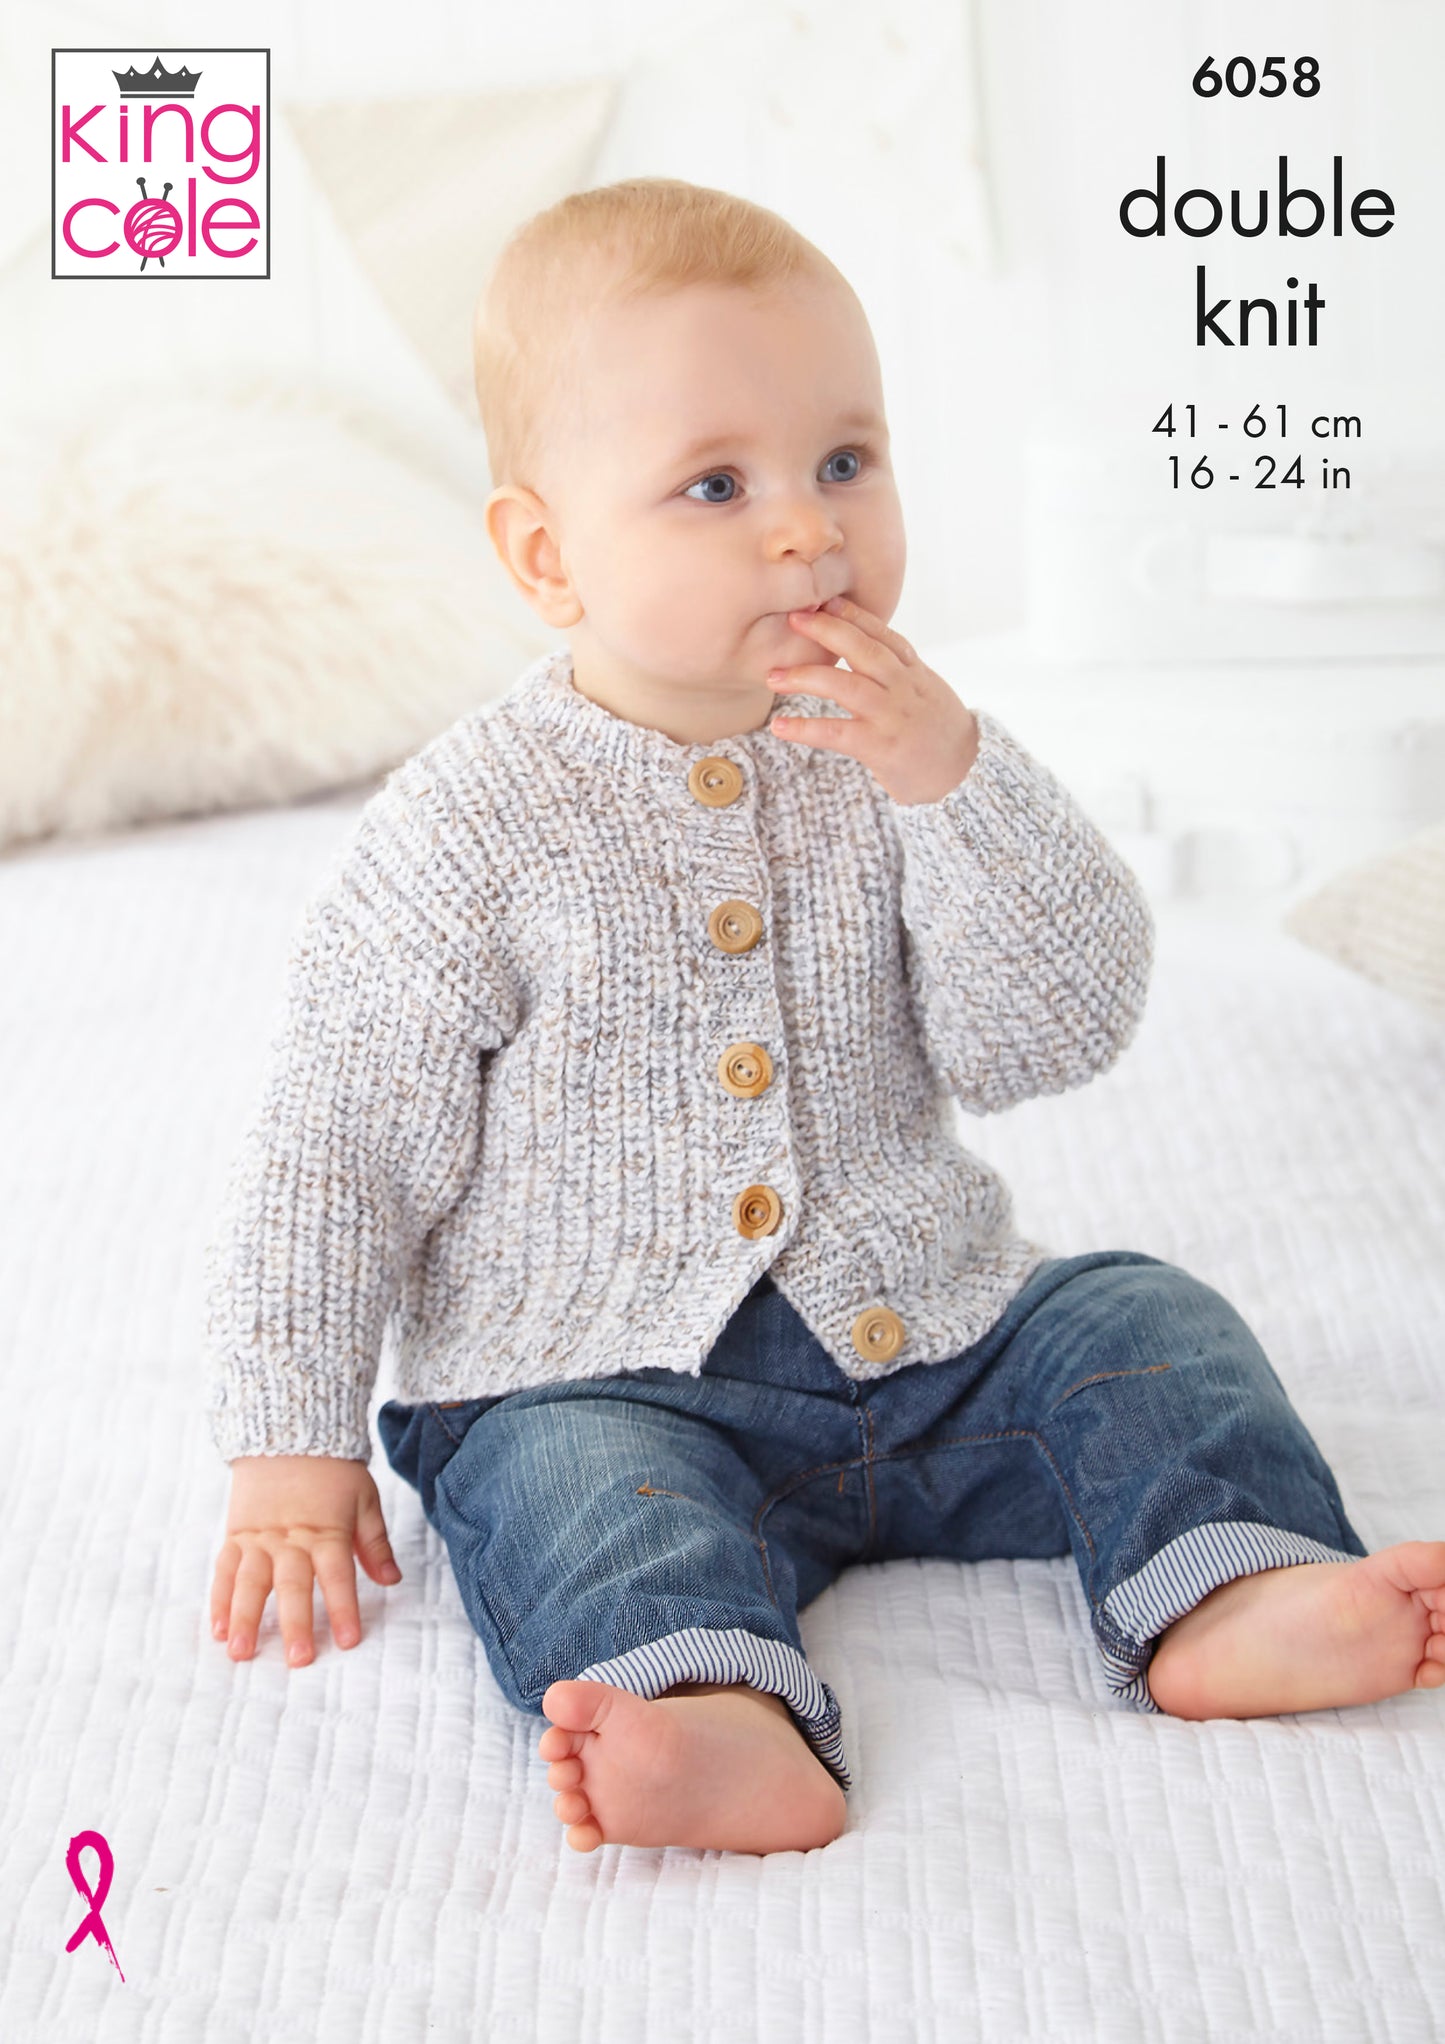 King Cole Pattern 6058 Cardigans & Sweater Knitted in Cloud Nine DK